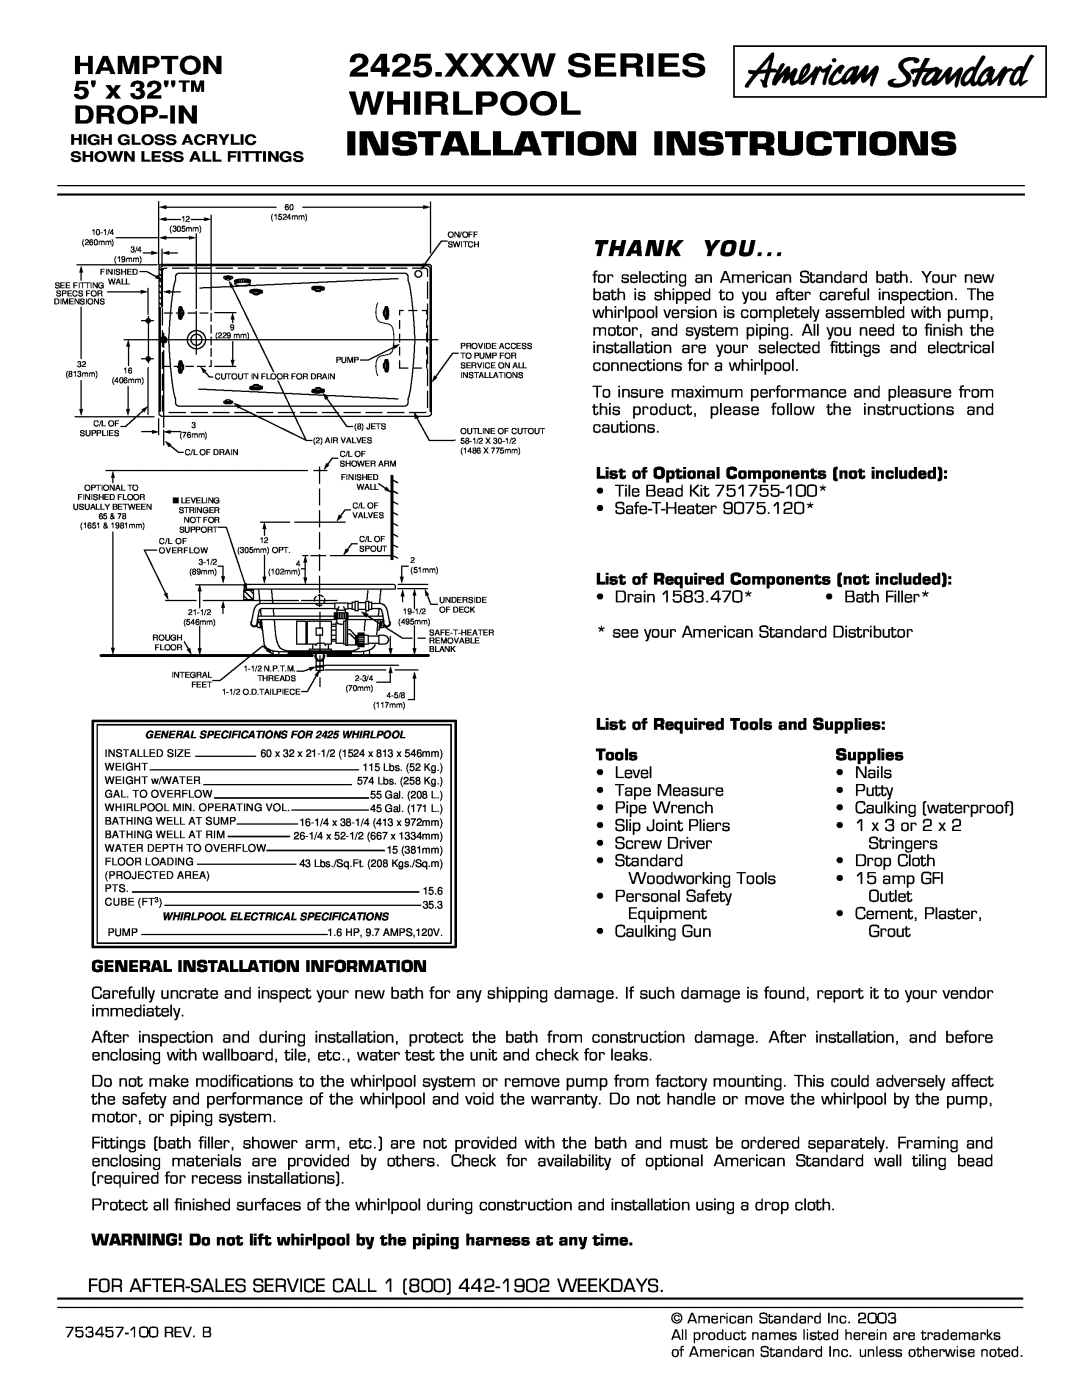 American Standard 2425.XXXW SERIES installation instructions Xxxw Series Whirlpool, Installation Instructions, Thank You 